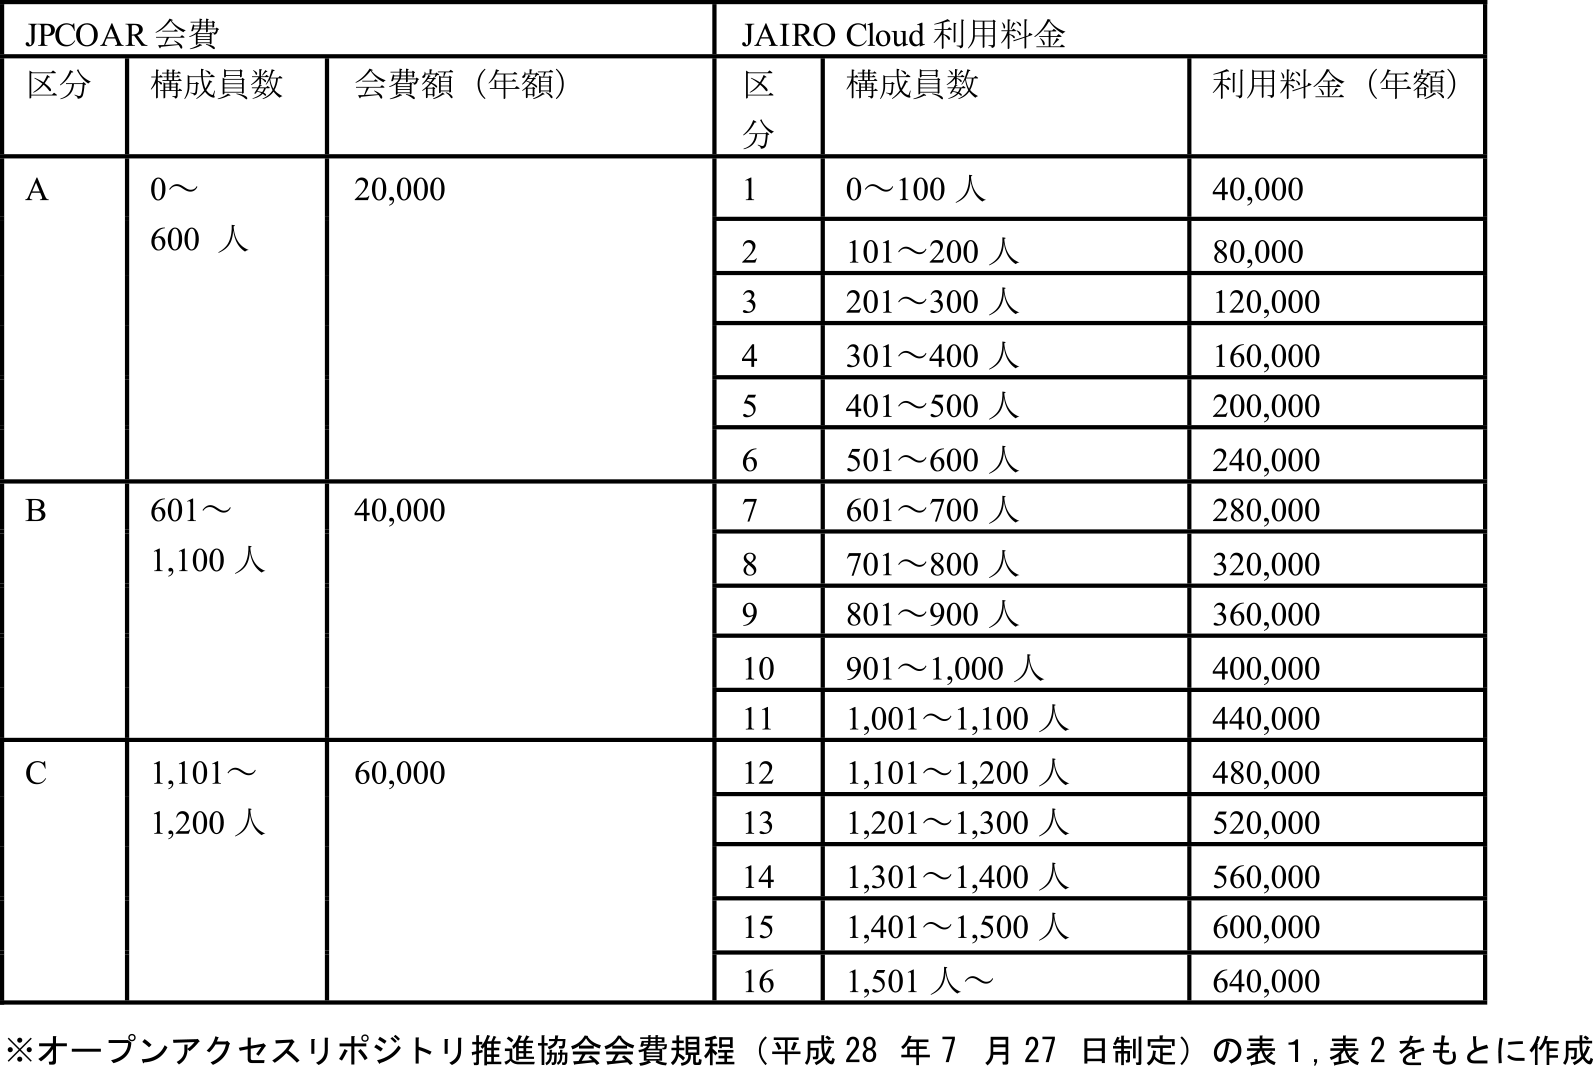 JPCOAR会費とJAIRO Cloud利用料金　JPCOAR annual membership fee and JAIRO Cloud annual usage fee.